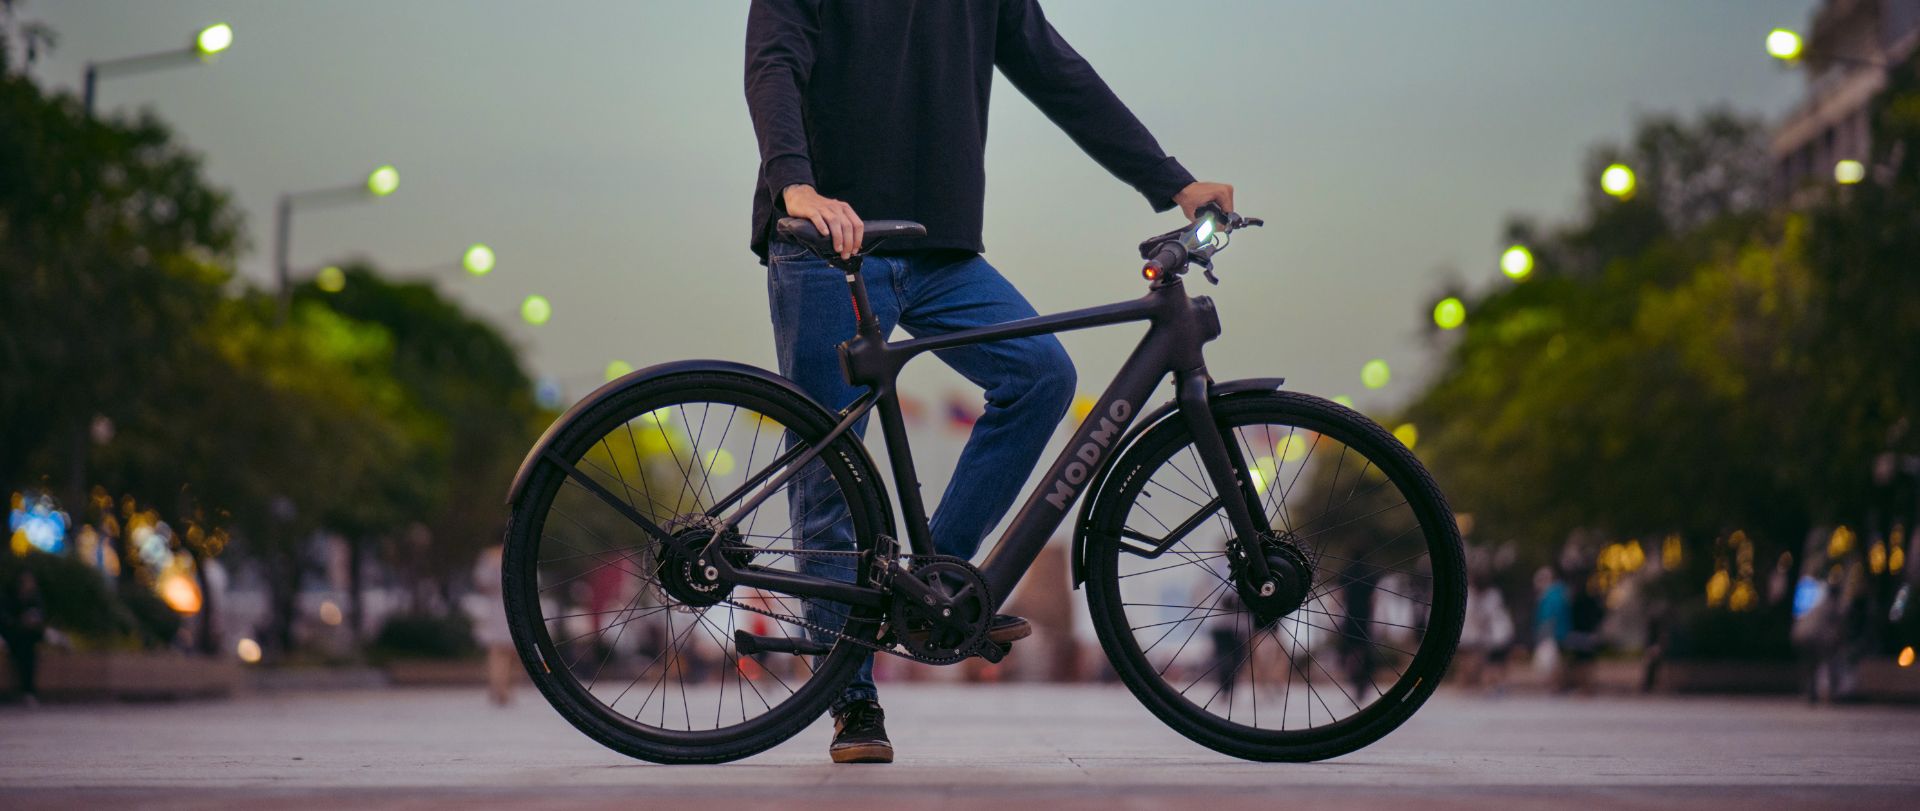 Modmo Saigon+ Electric Bicycle - RRP £2800 - Size M (Rider: 155-175cm) - Image 10 of 18